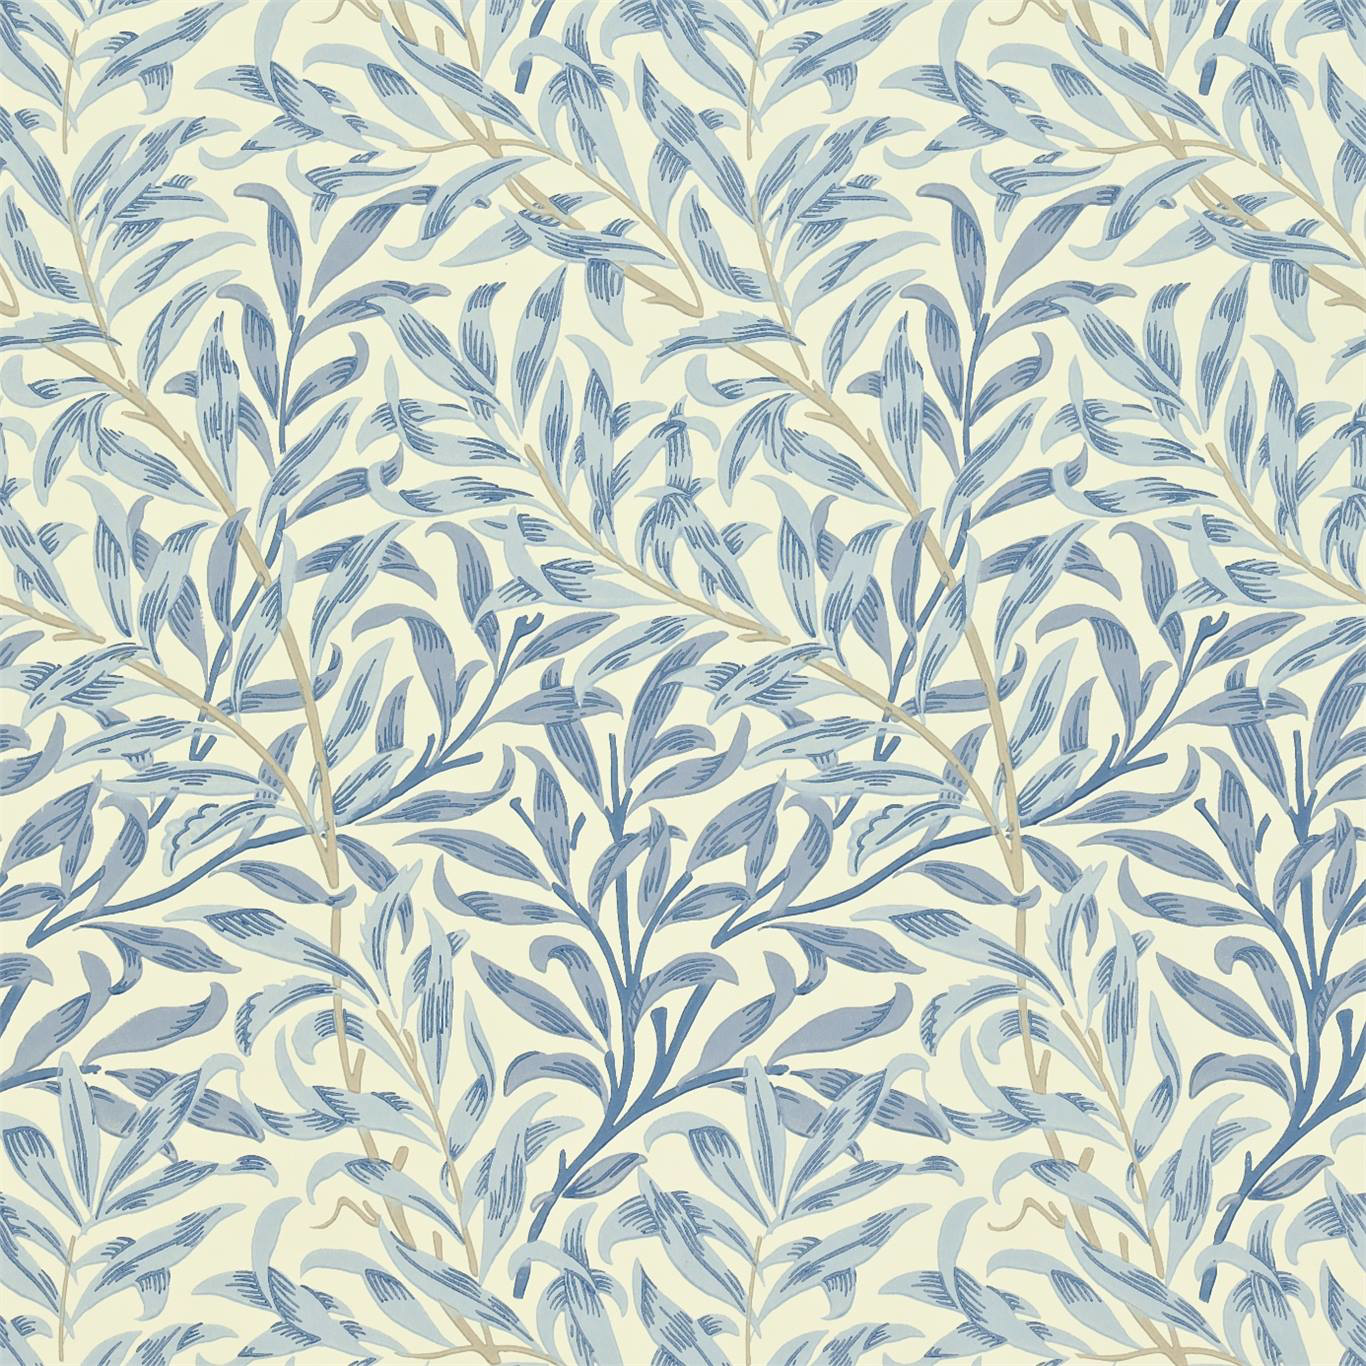 Willow Boughs Blue - 210491 wallpaper William Morris